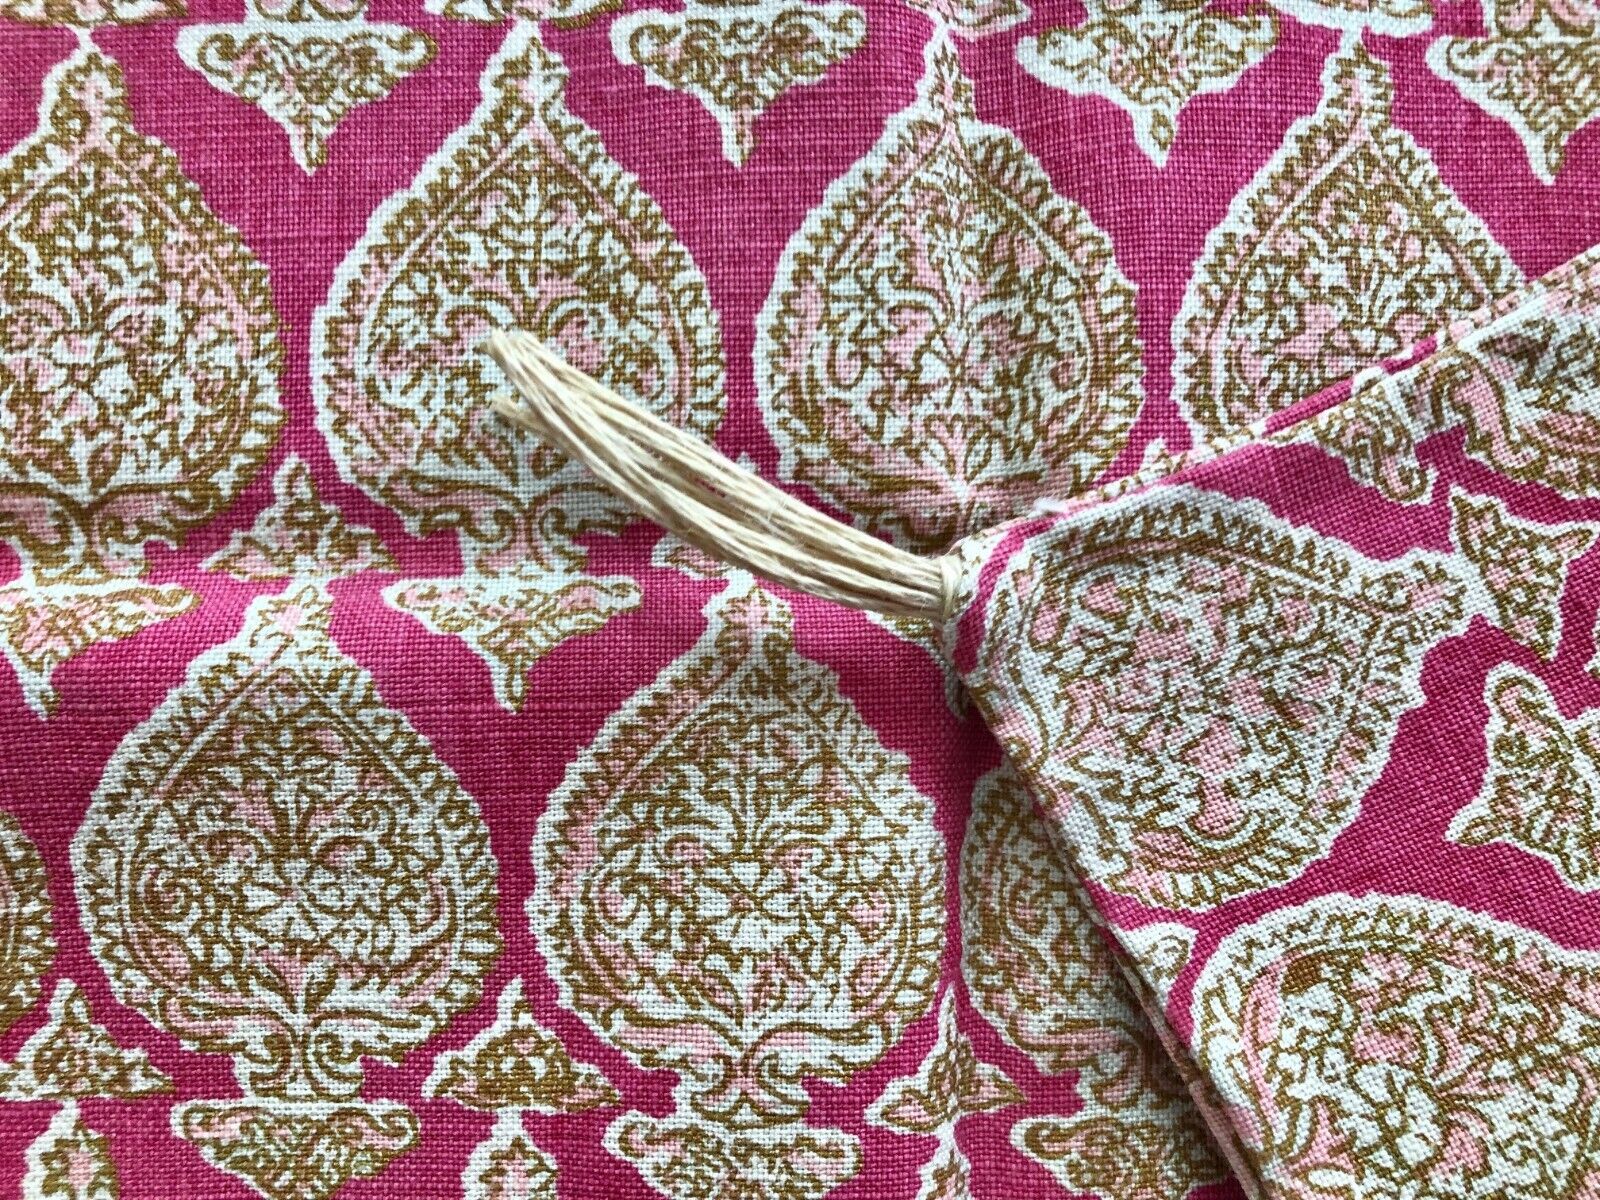 RAOUL TEXTILES Sari Fuchsia Pink Paisley Linen Throw Pillow Cover New